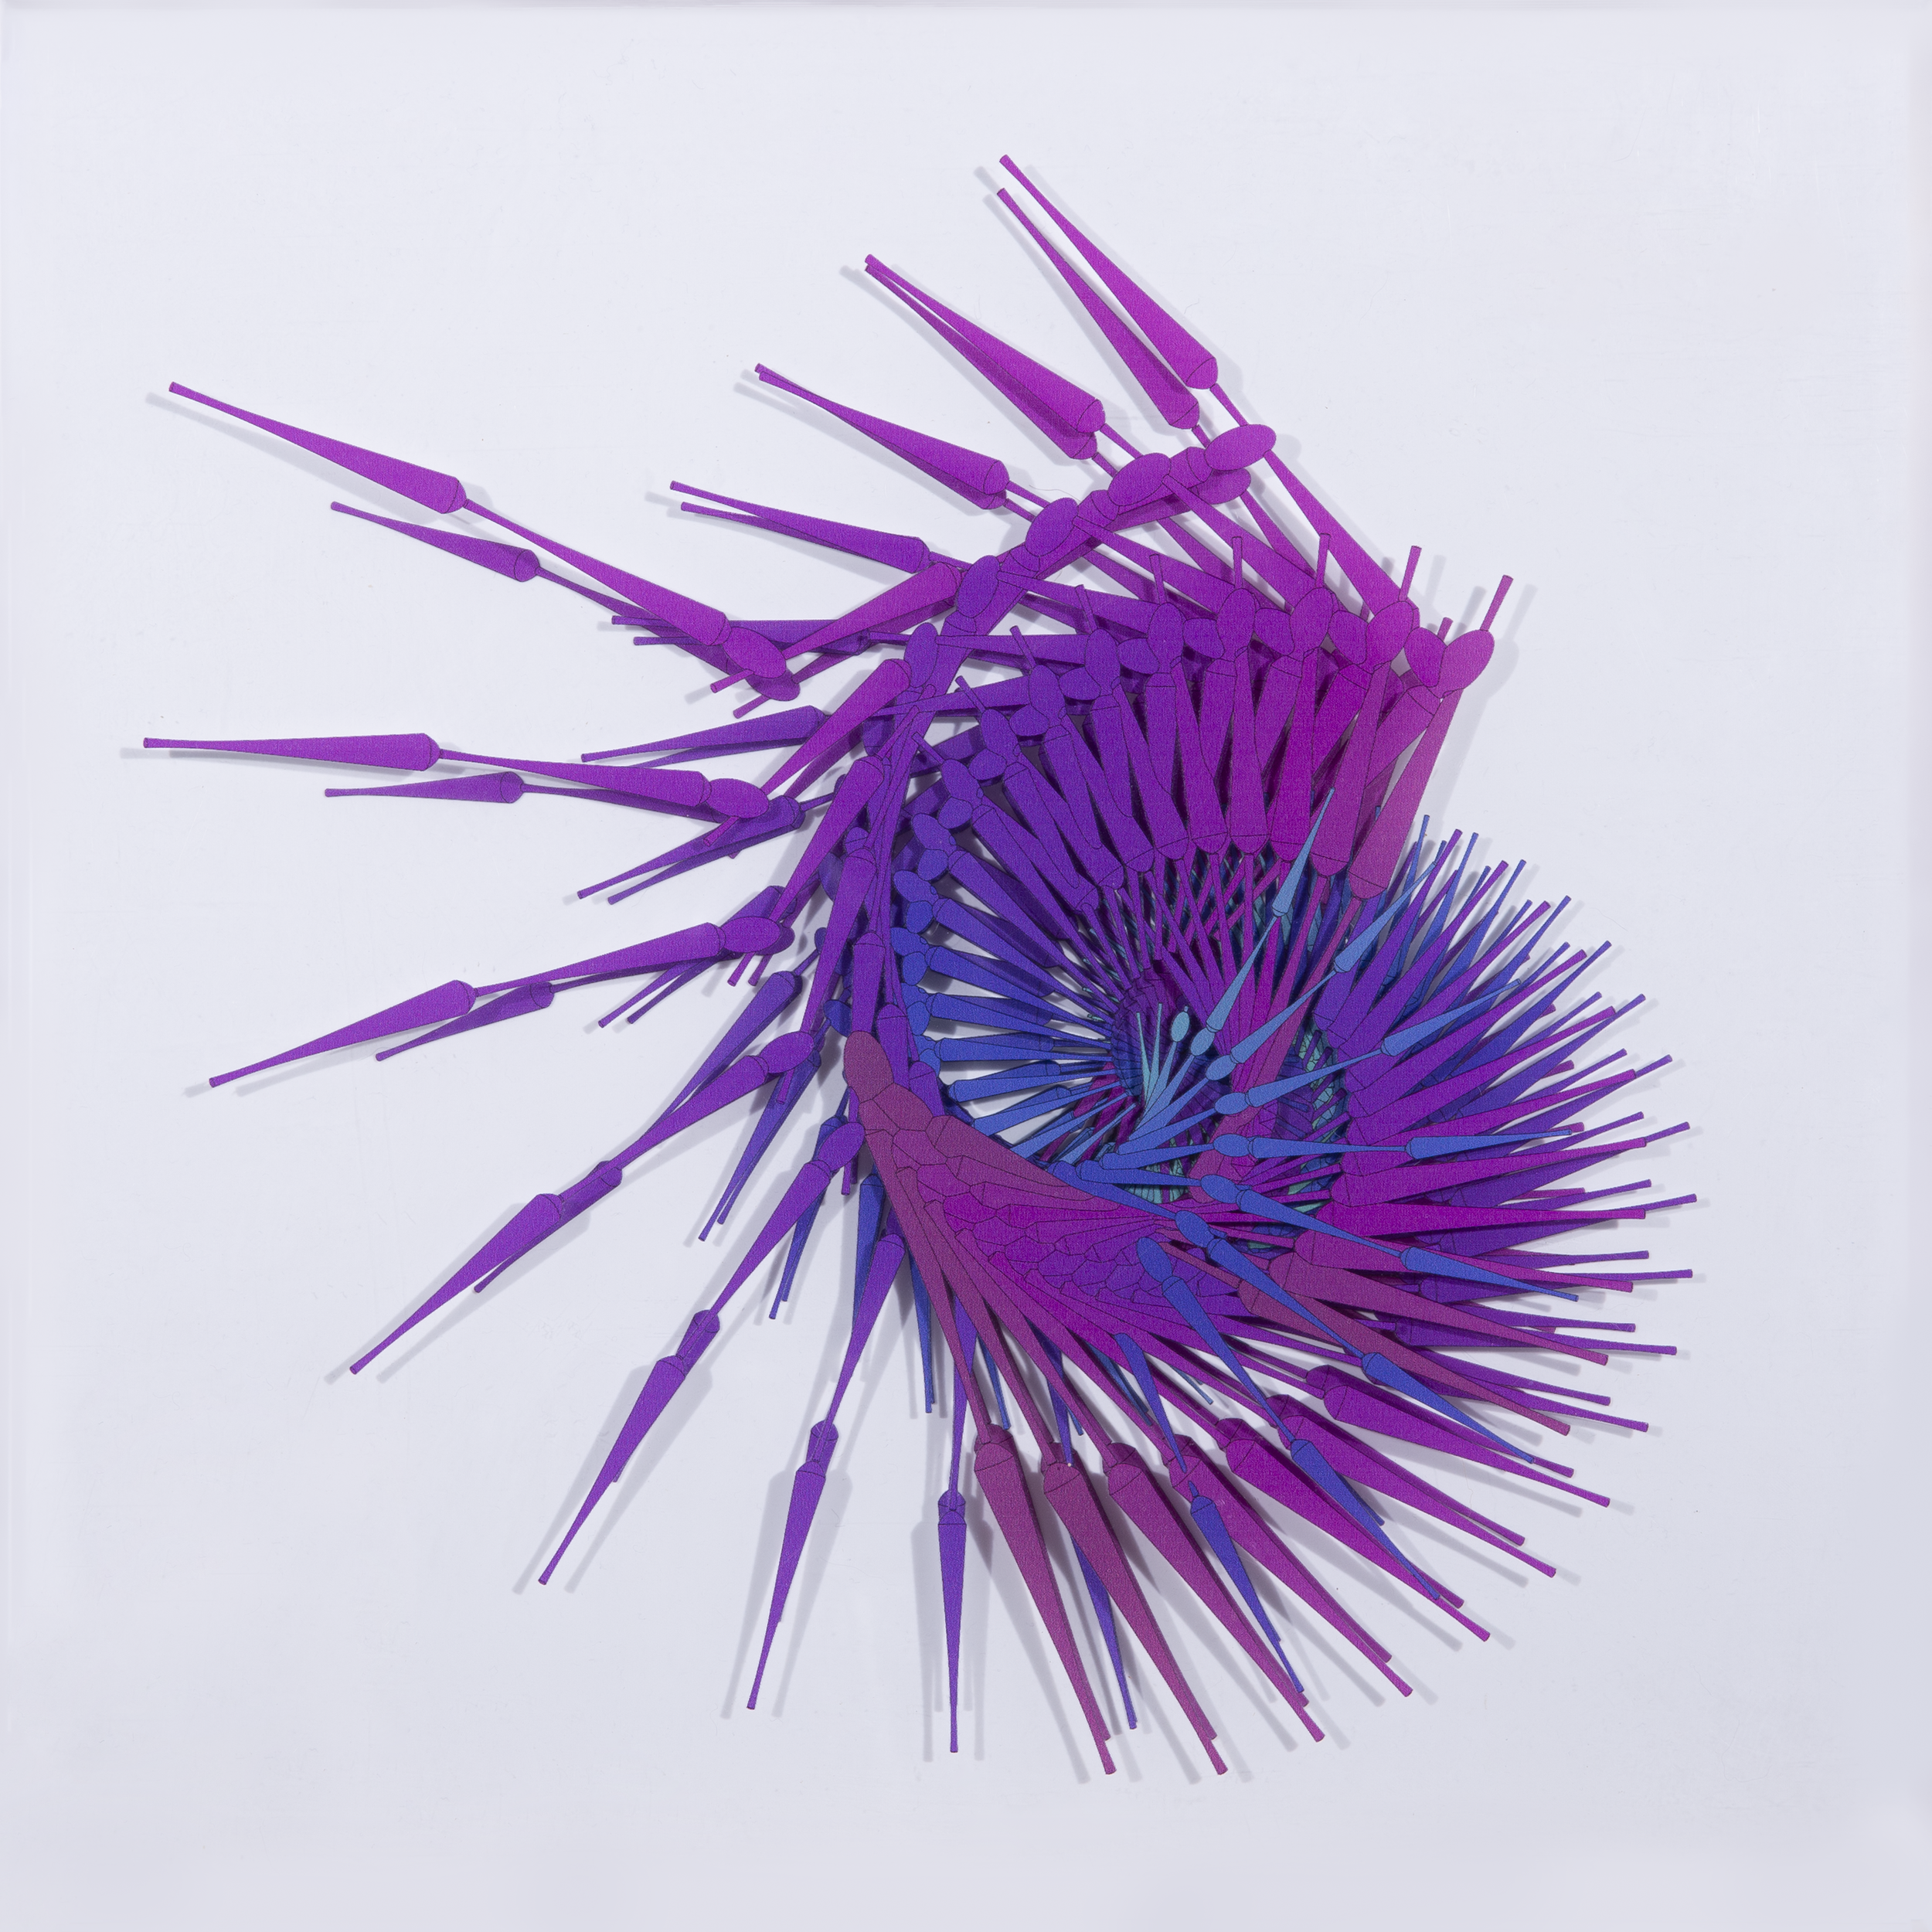 purple 3, 16” x 16” multi layered print on acrylic £1050, ltd edition of 20